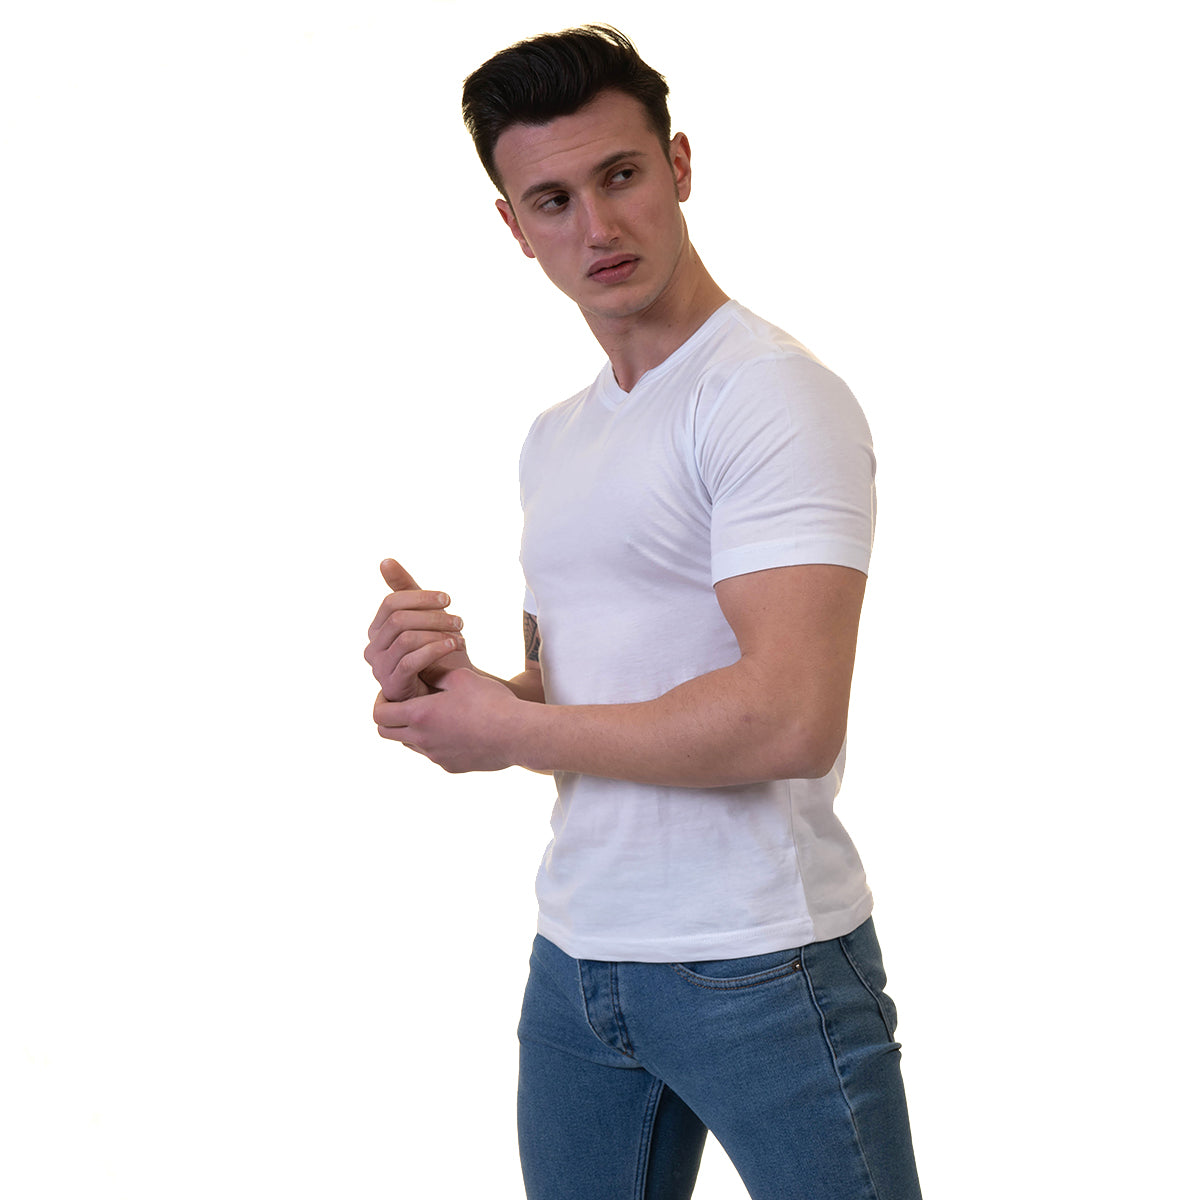 White European Made & Designed Premium Quality T-Shirt - Crew Neck Short Sleeve T-Shirts